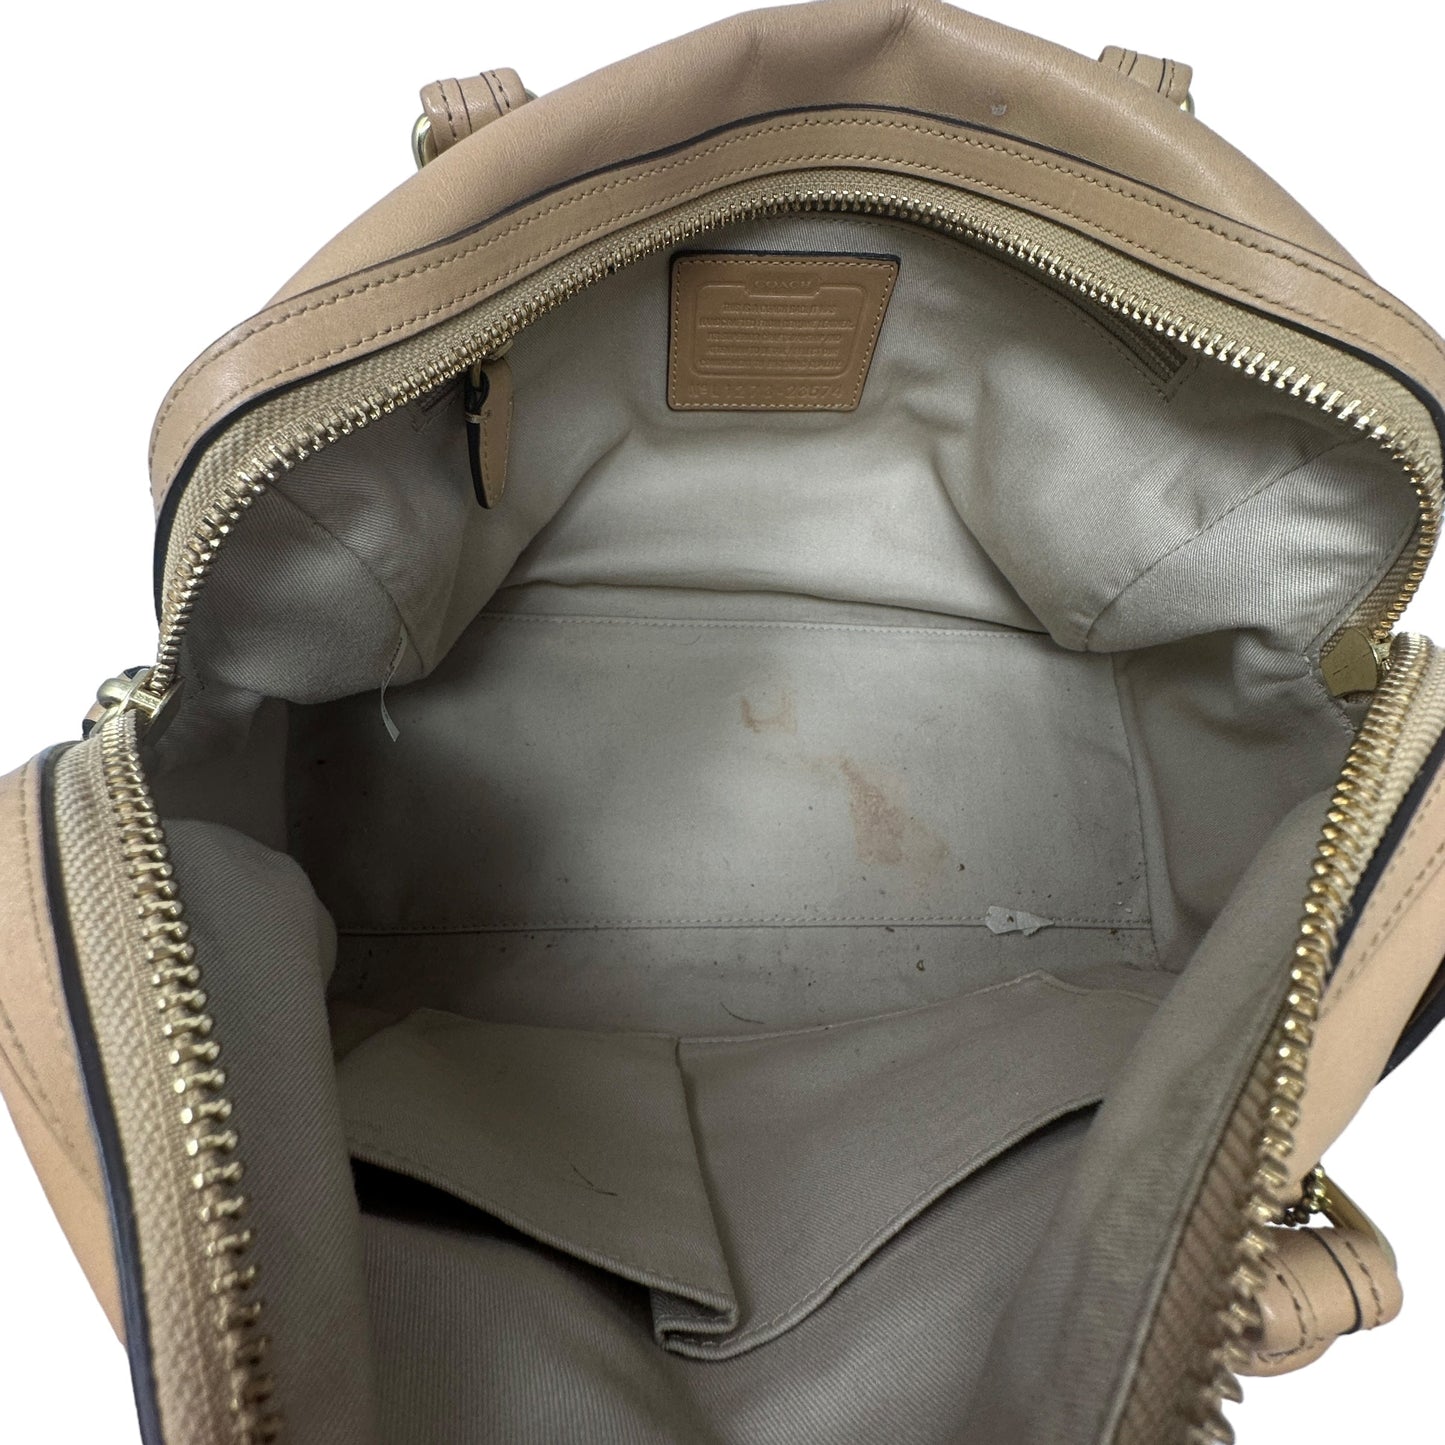 Handbag Leather By Coach  Size: Medium